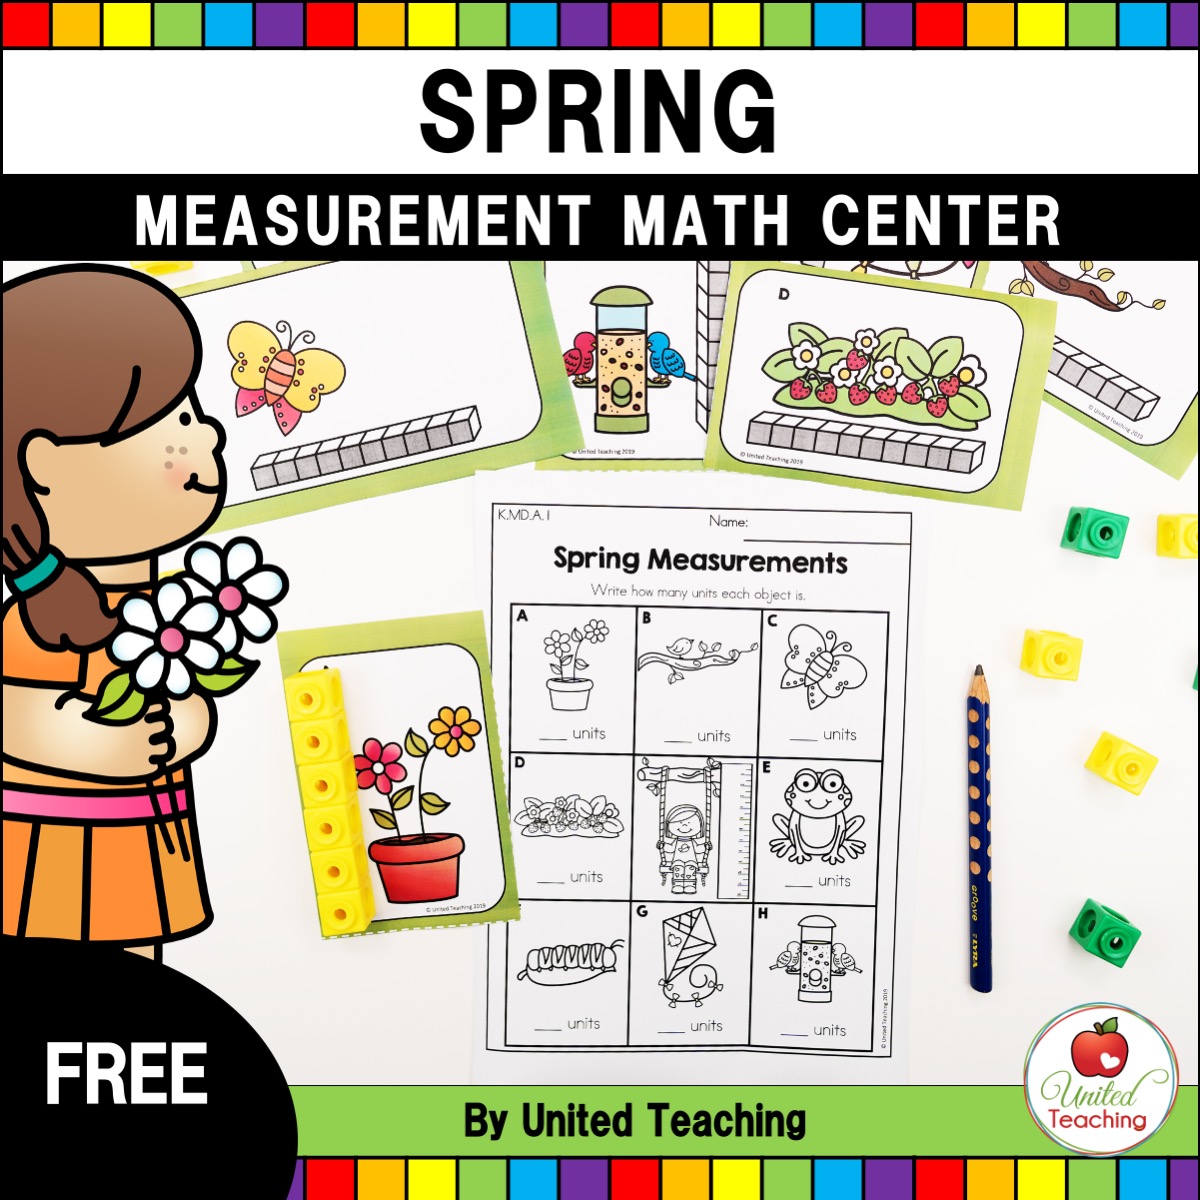 Spring Measurement Math Center Cover